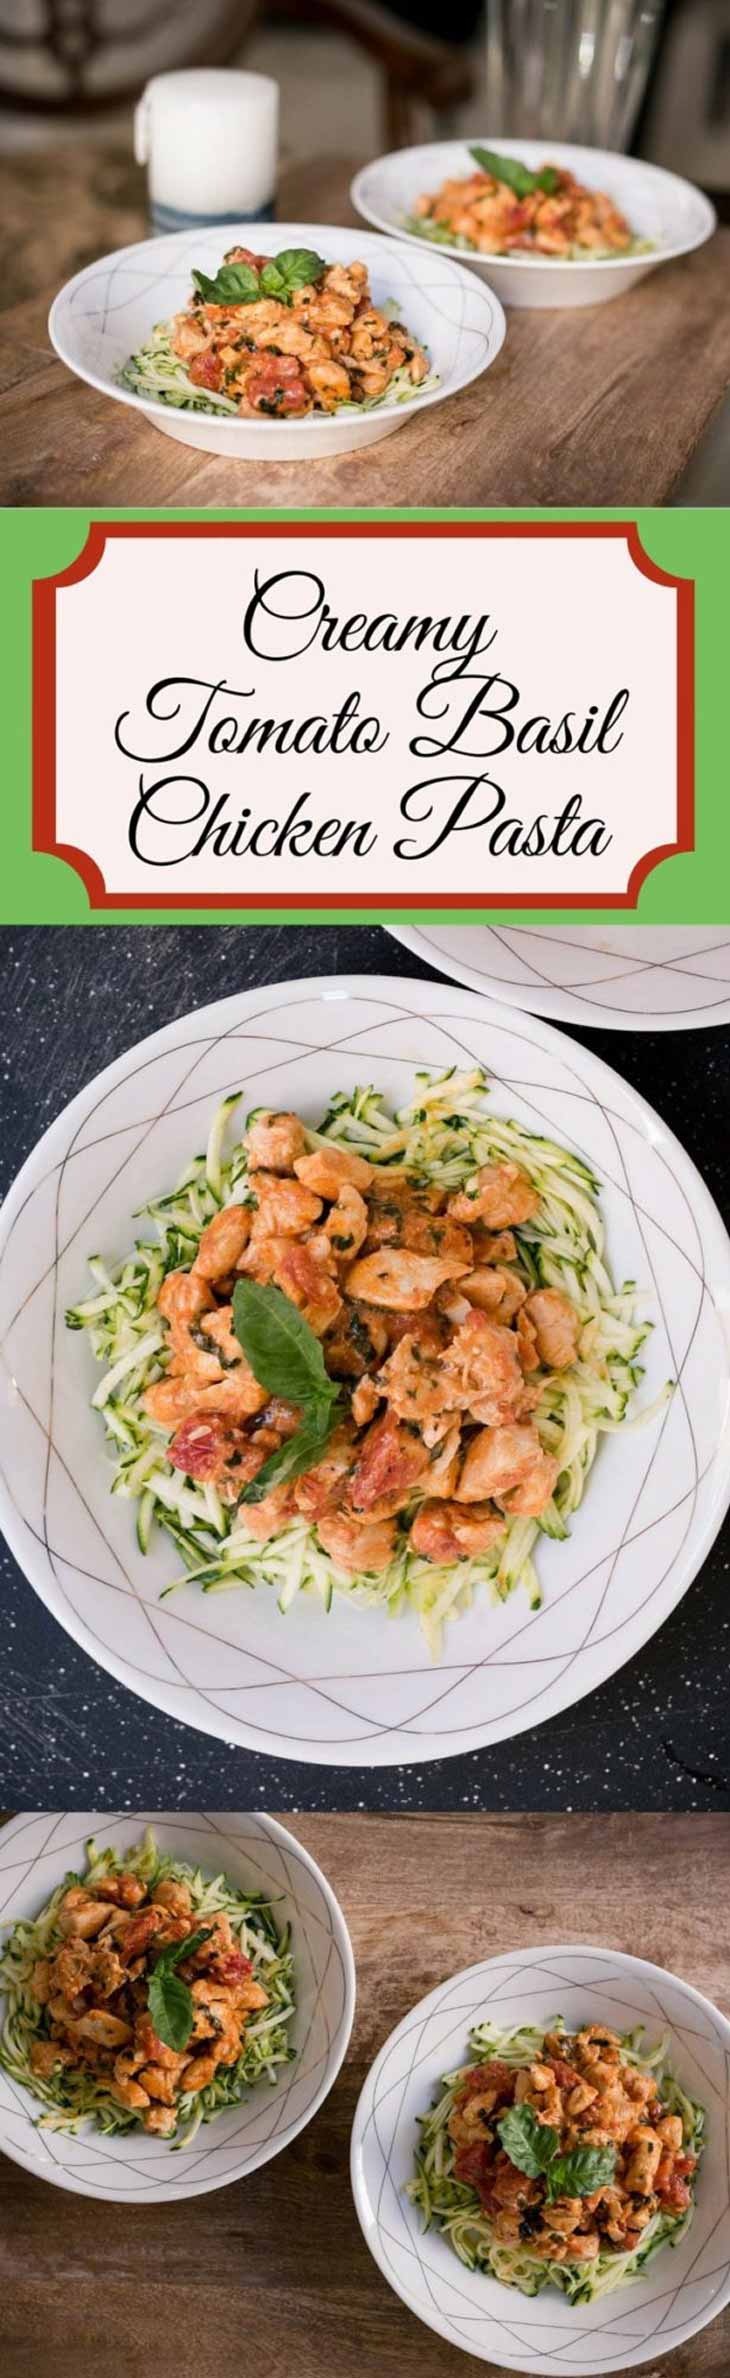 Creamy Tomato Basil Chicken Pasta #paleo #recipes #glutenfree https://paleoflourish.com/creamy-tomato-basil-chicken-pasta 